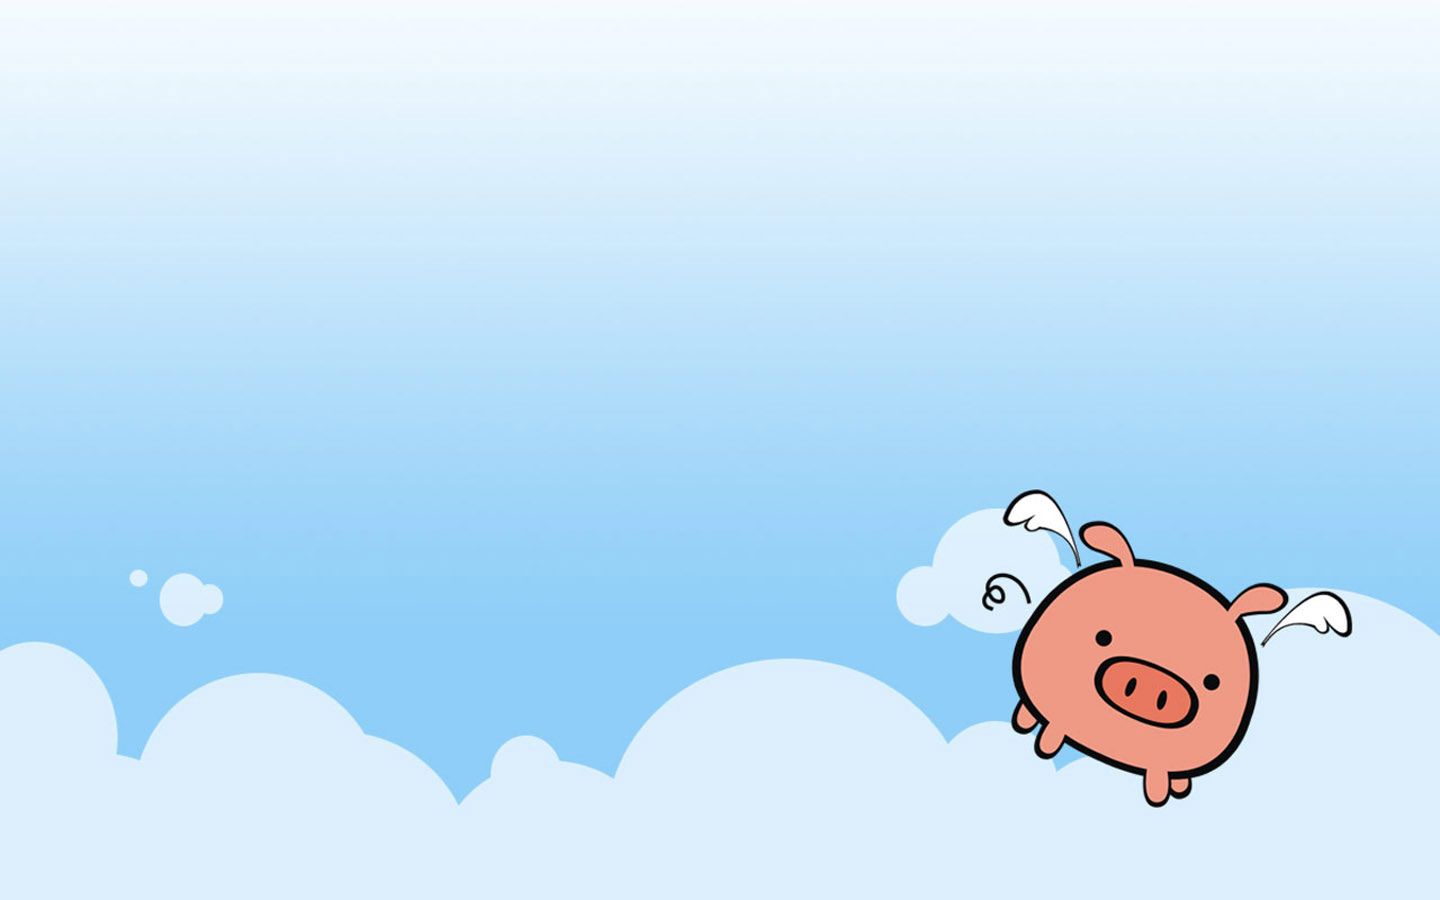 The Cute Pig Illustrator Wallpaper Ics Desktop Background